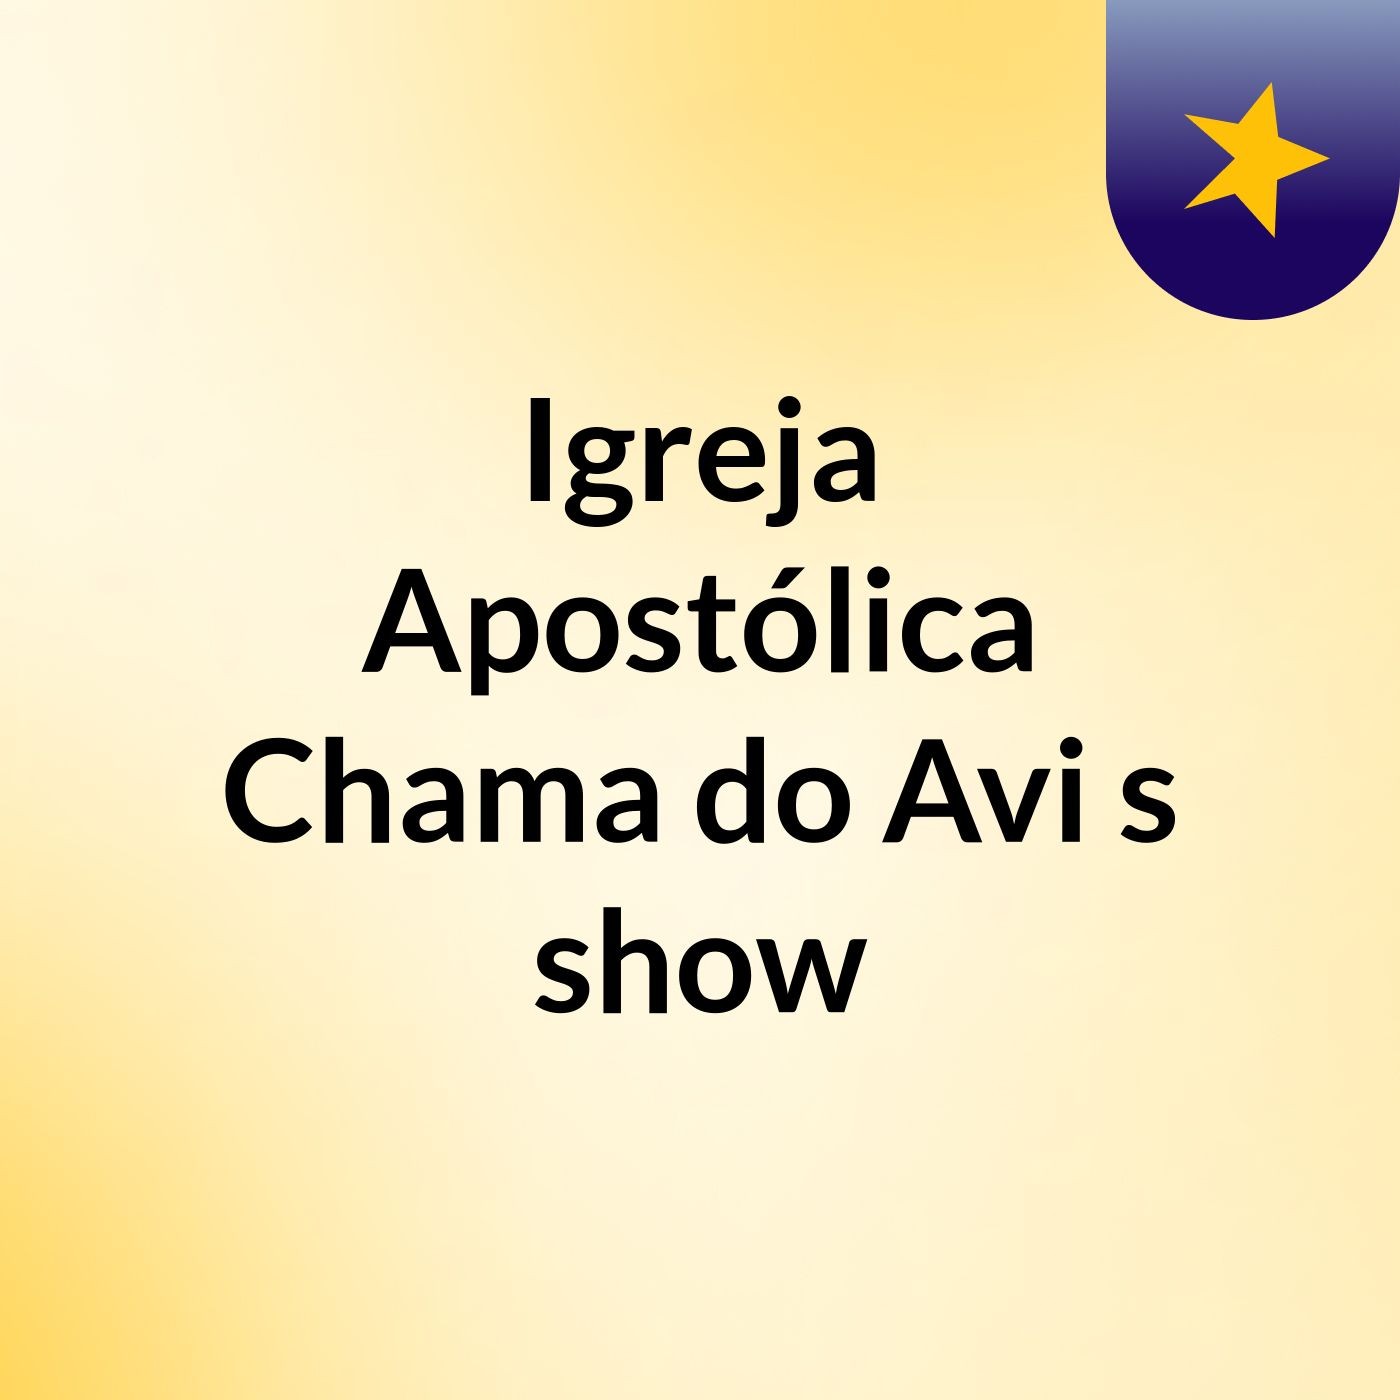 Episódio 3 - Igreja Apostólica Chama do Avi's show